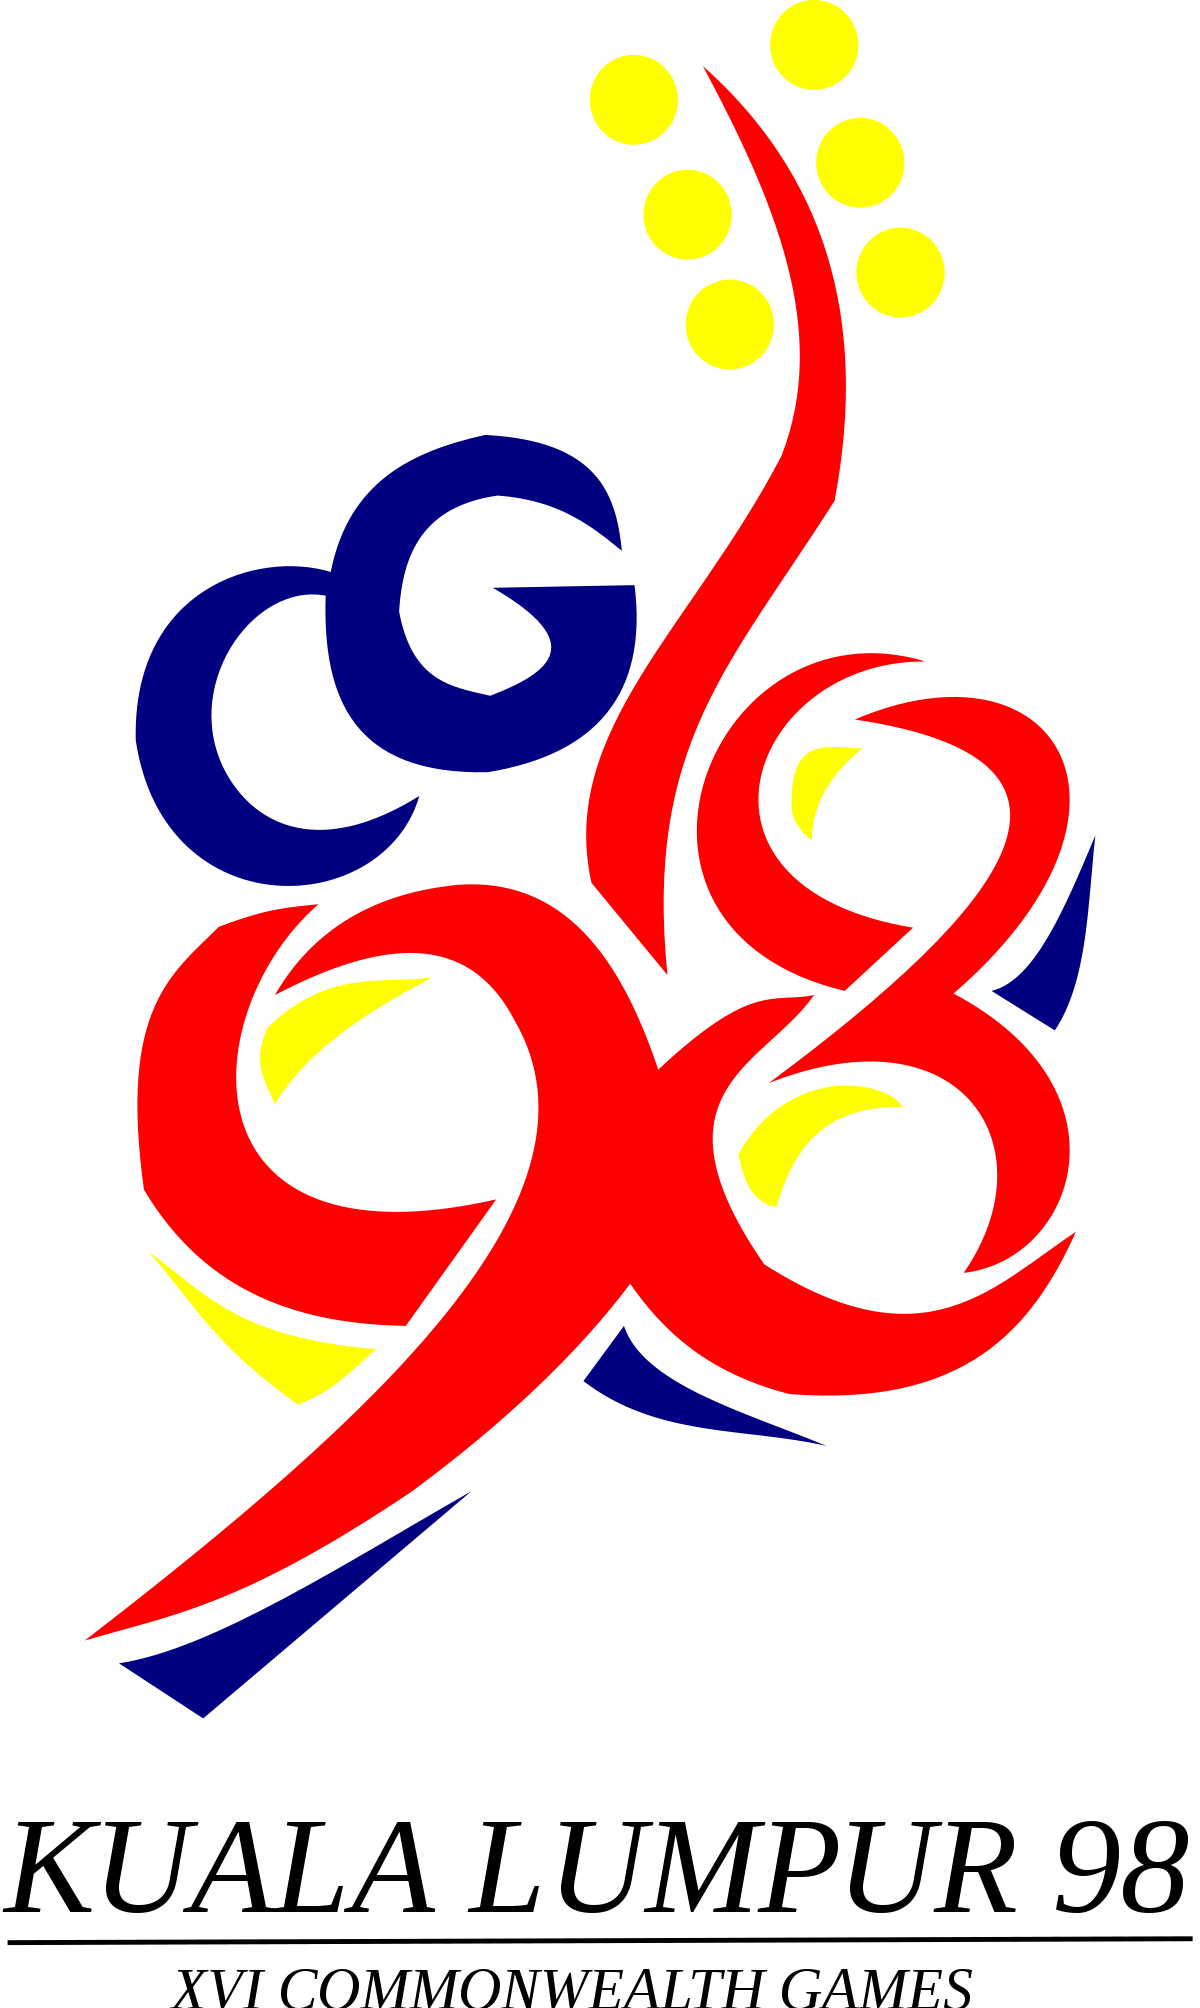 Google 1998 Logo - 1998 Commonwealth Games